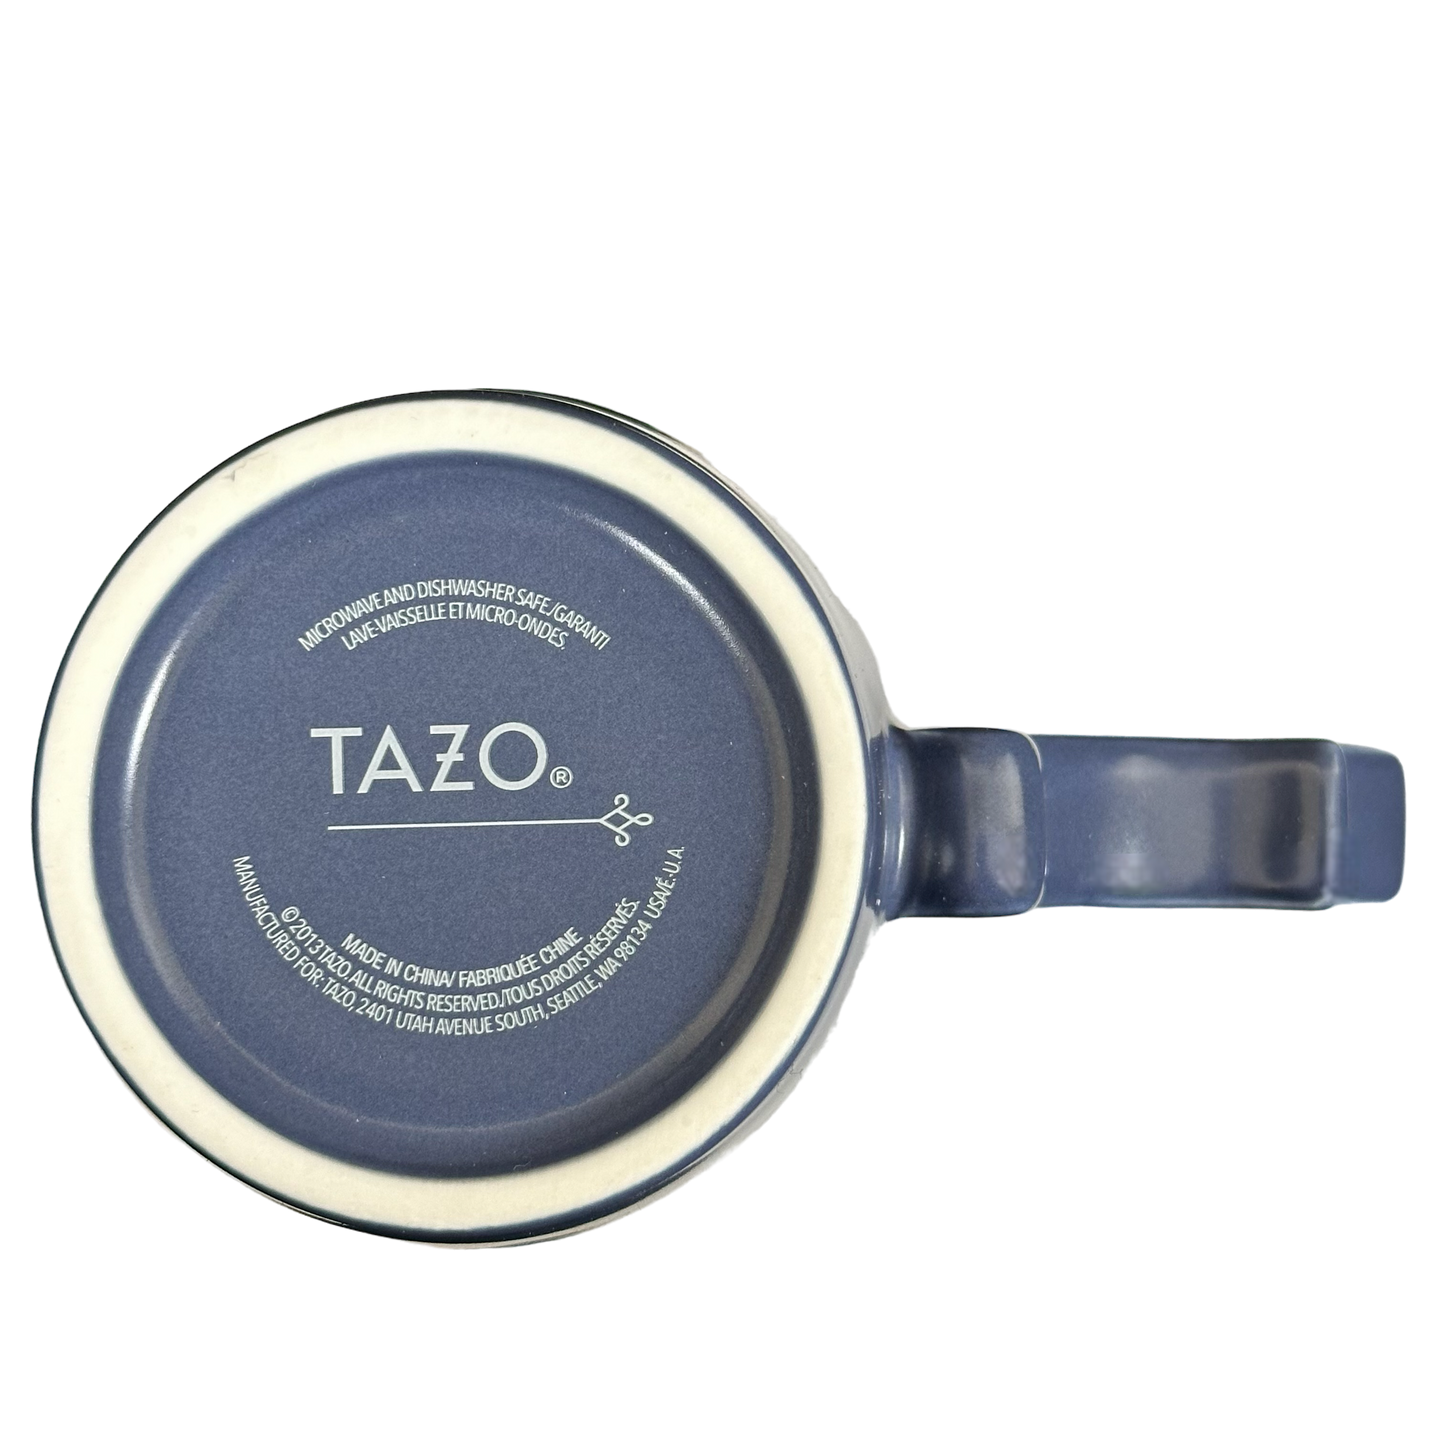 Rococo Scroll Handle Slate Blue Mug 2013 Starbucks Tazo